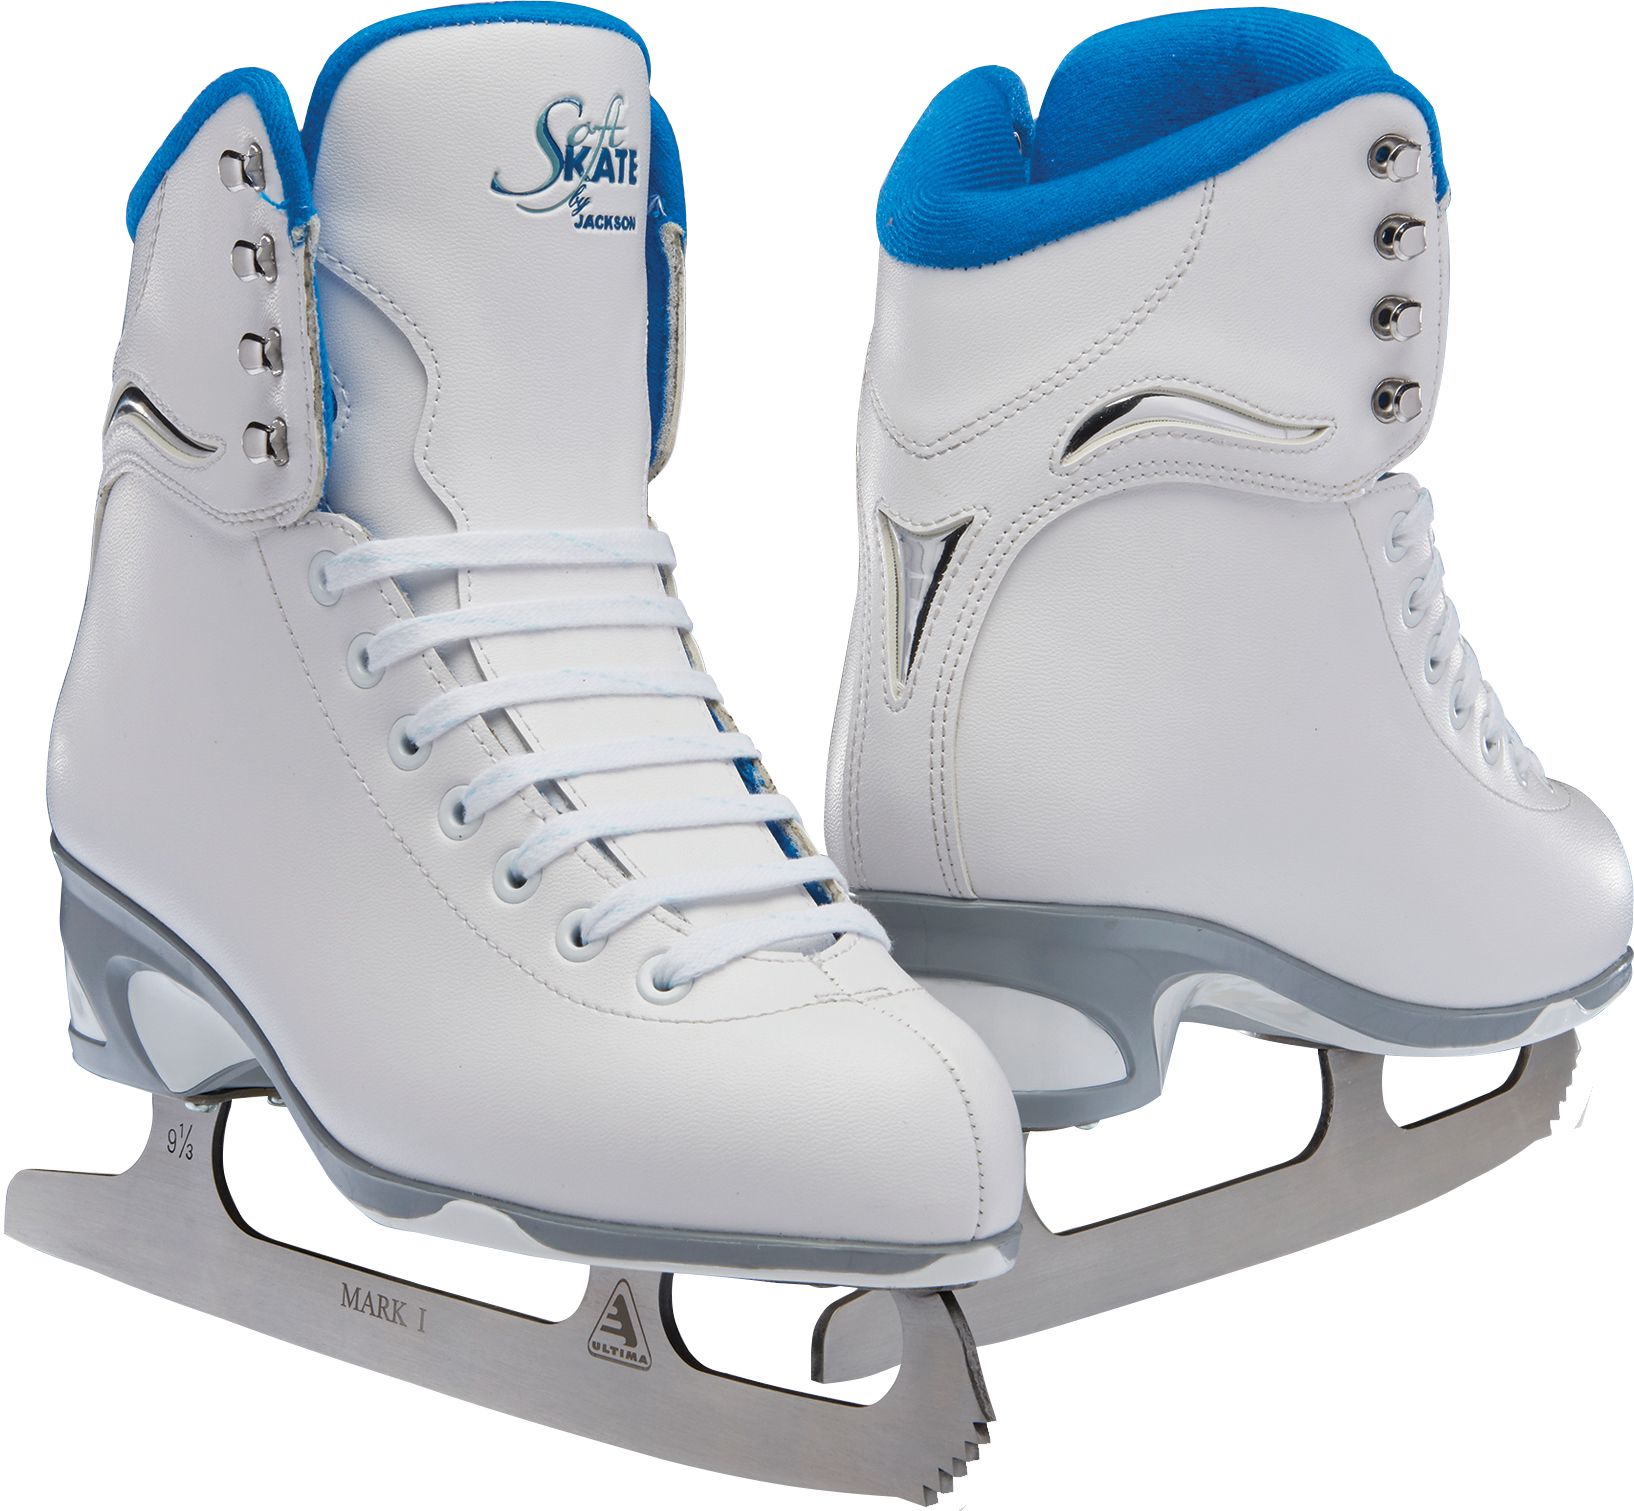 buy recreational ice skates